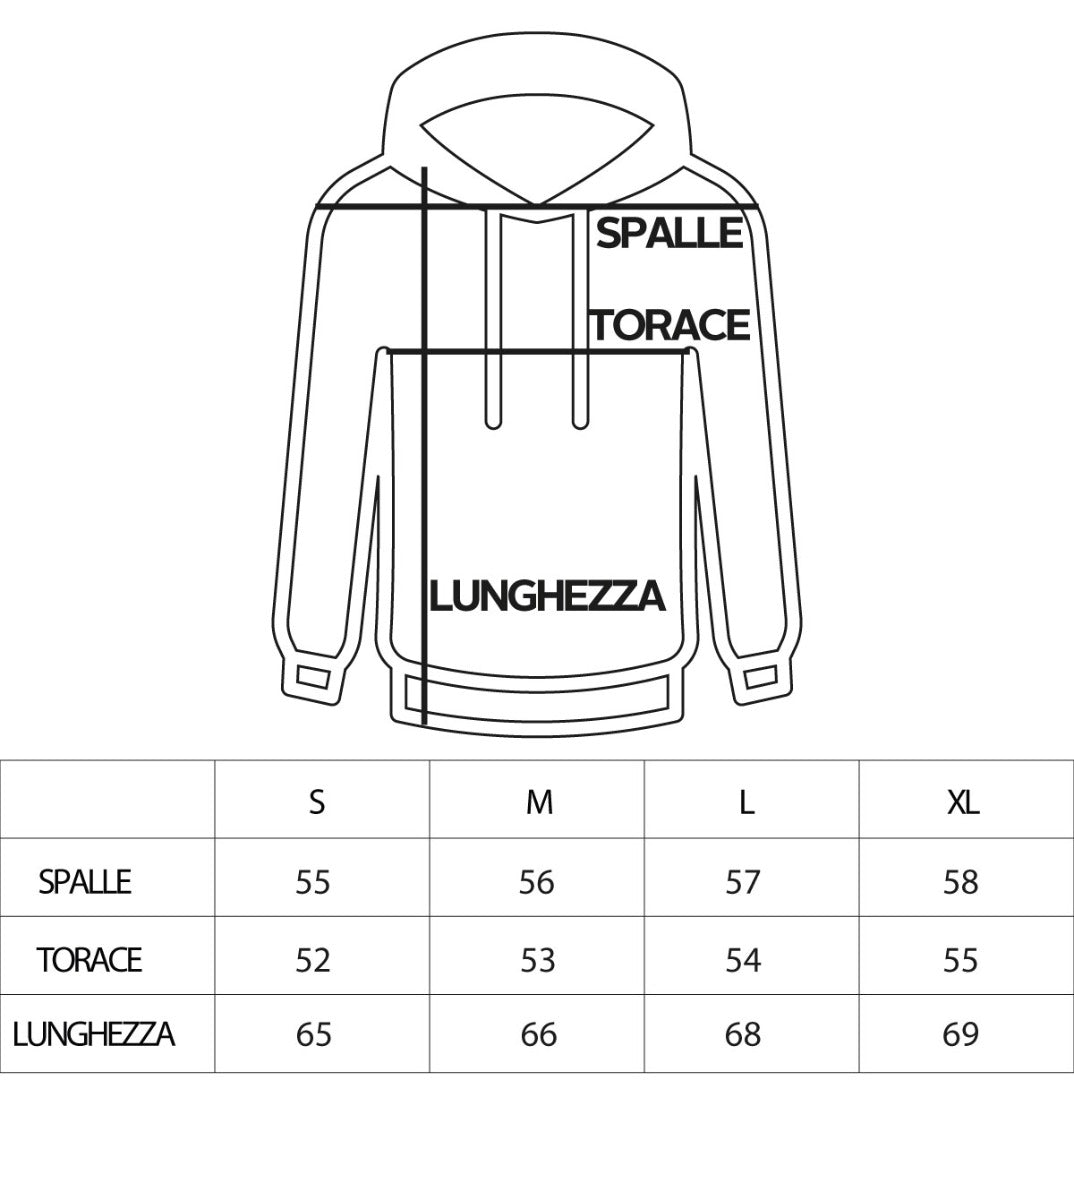 Men's Crewneck Sweatshirt Black Regular Fit Print GIOSAL-F2662A